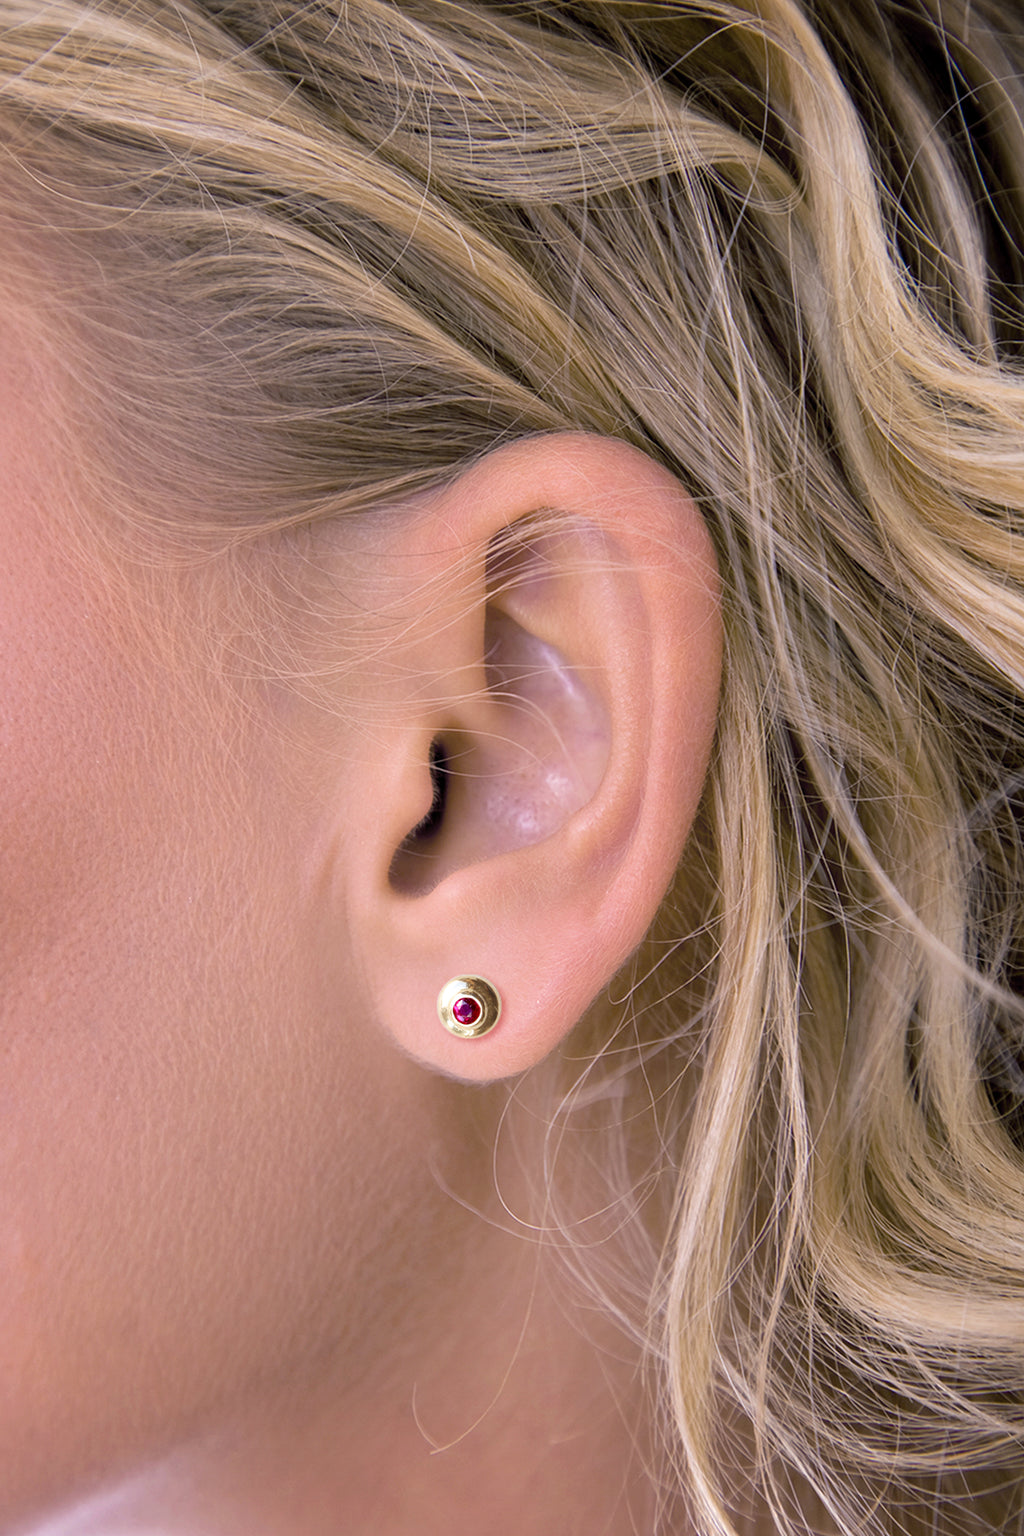 9ct Gold Petite Ruby Earrings